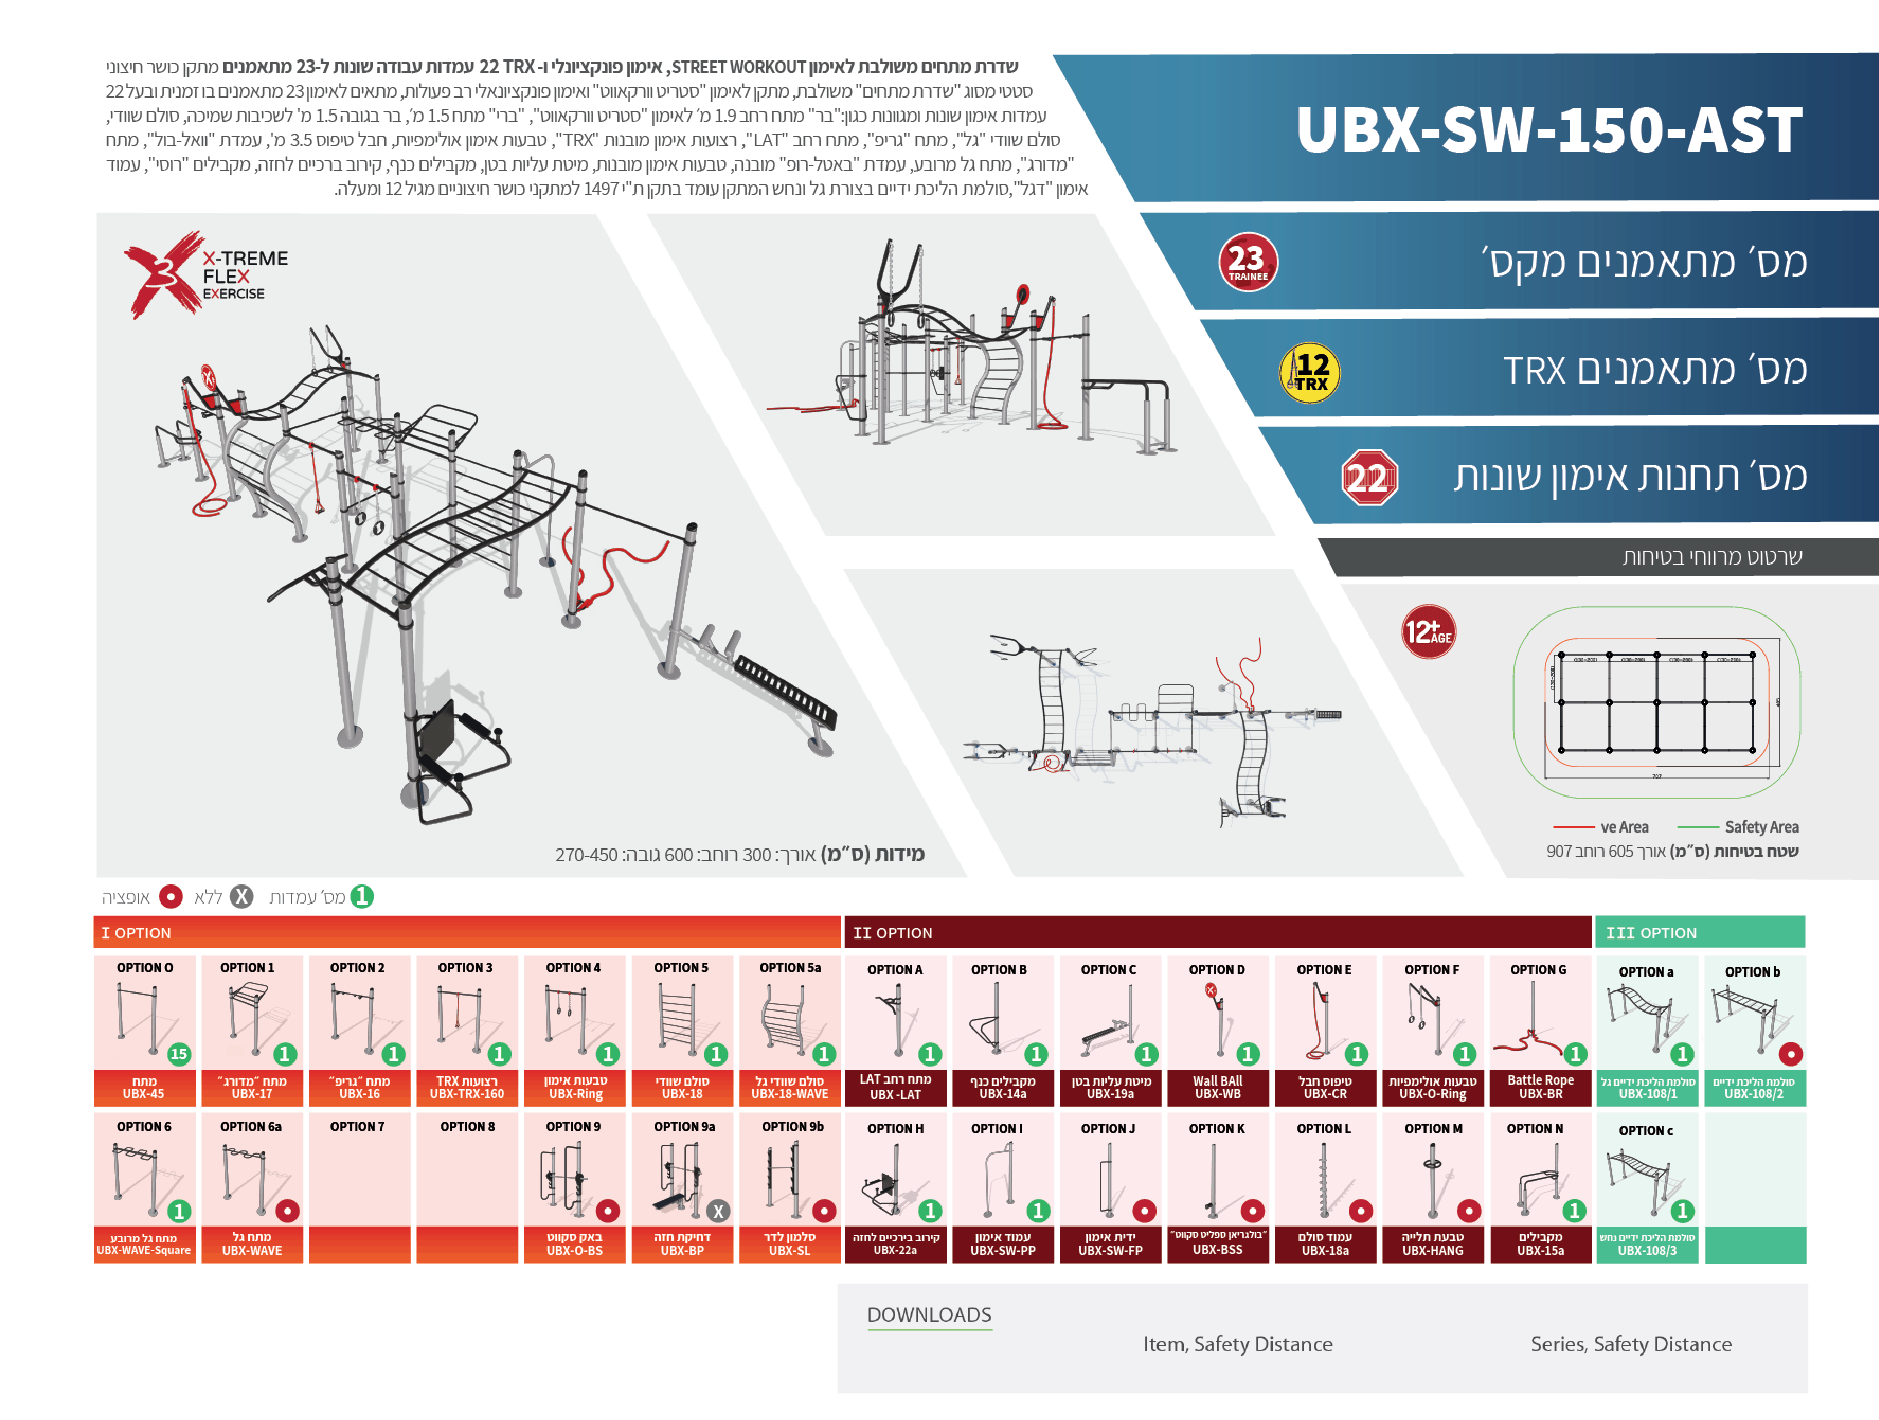 ubx-sw-150-ast אורבניקס - מתקן כושר